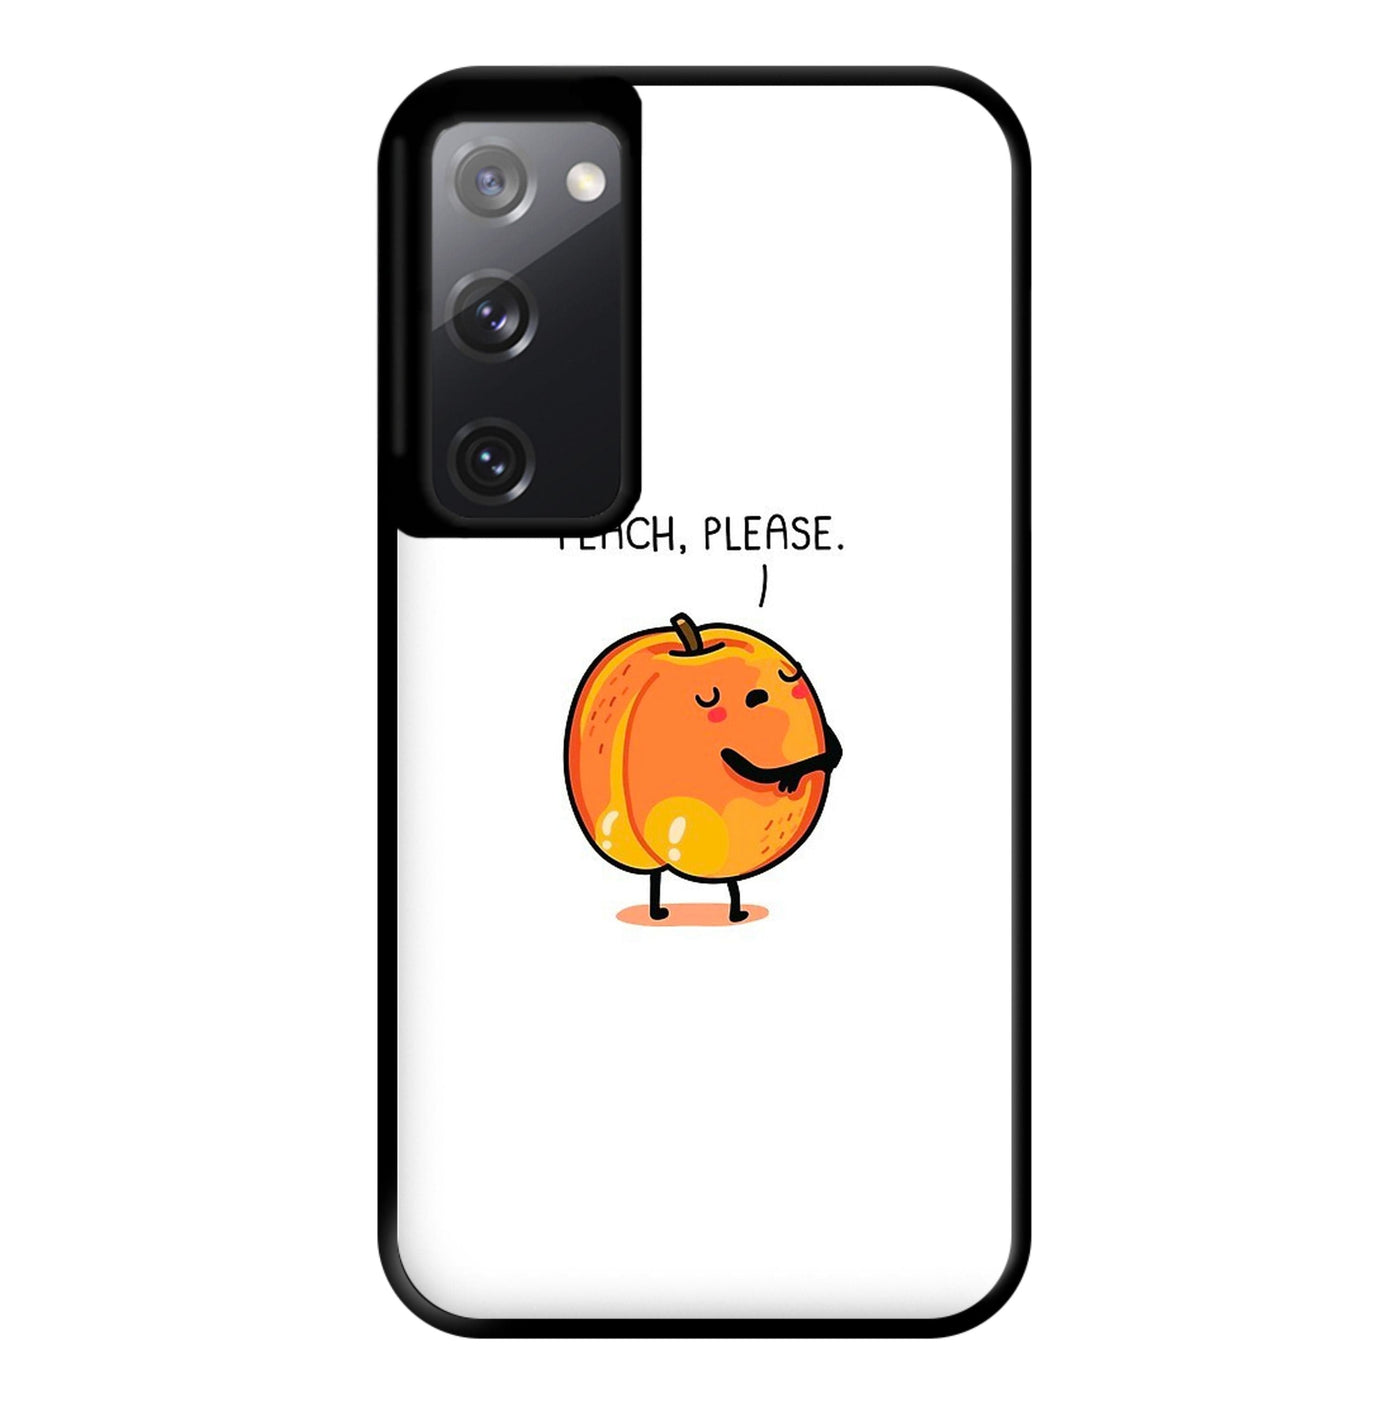 Peach, Please - Funny Pun Phone Case